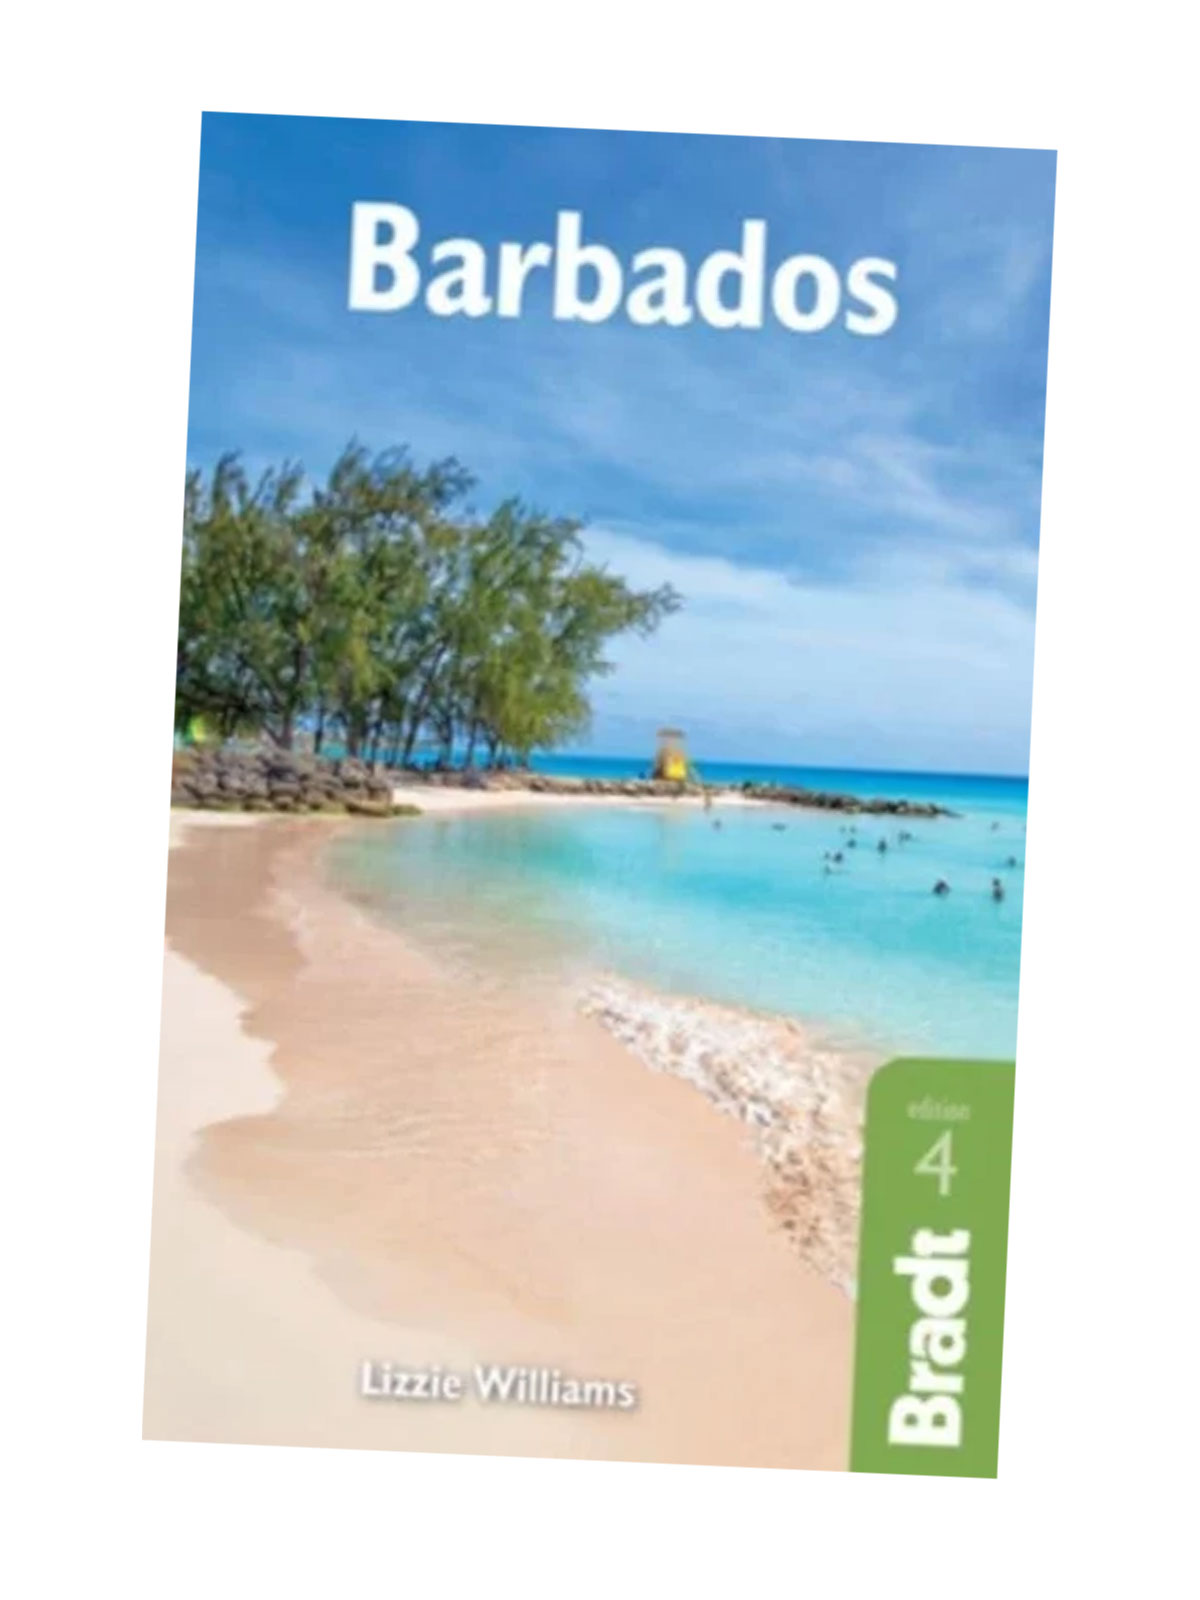 Barbados reiseguide